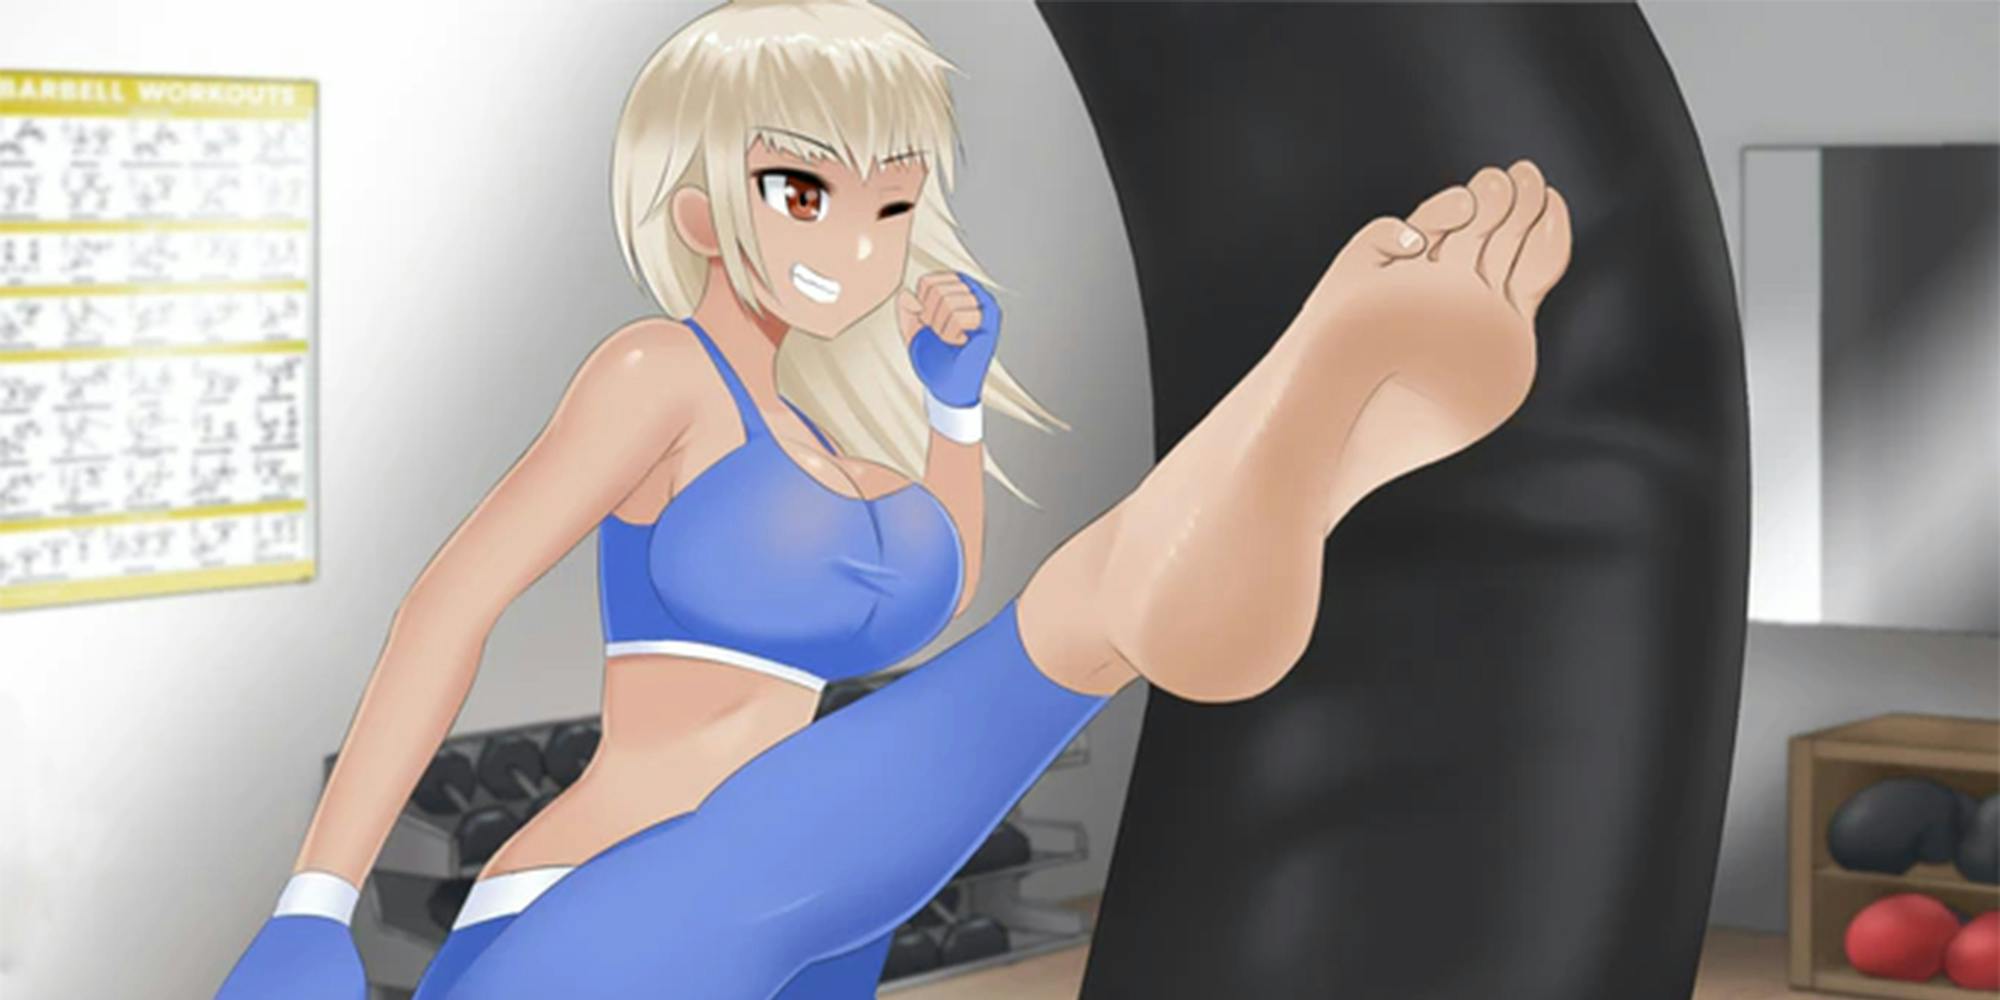 Footjob Sex Games - My Toes Story: Kickstarter Offers Foot Fetish Visual Novel